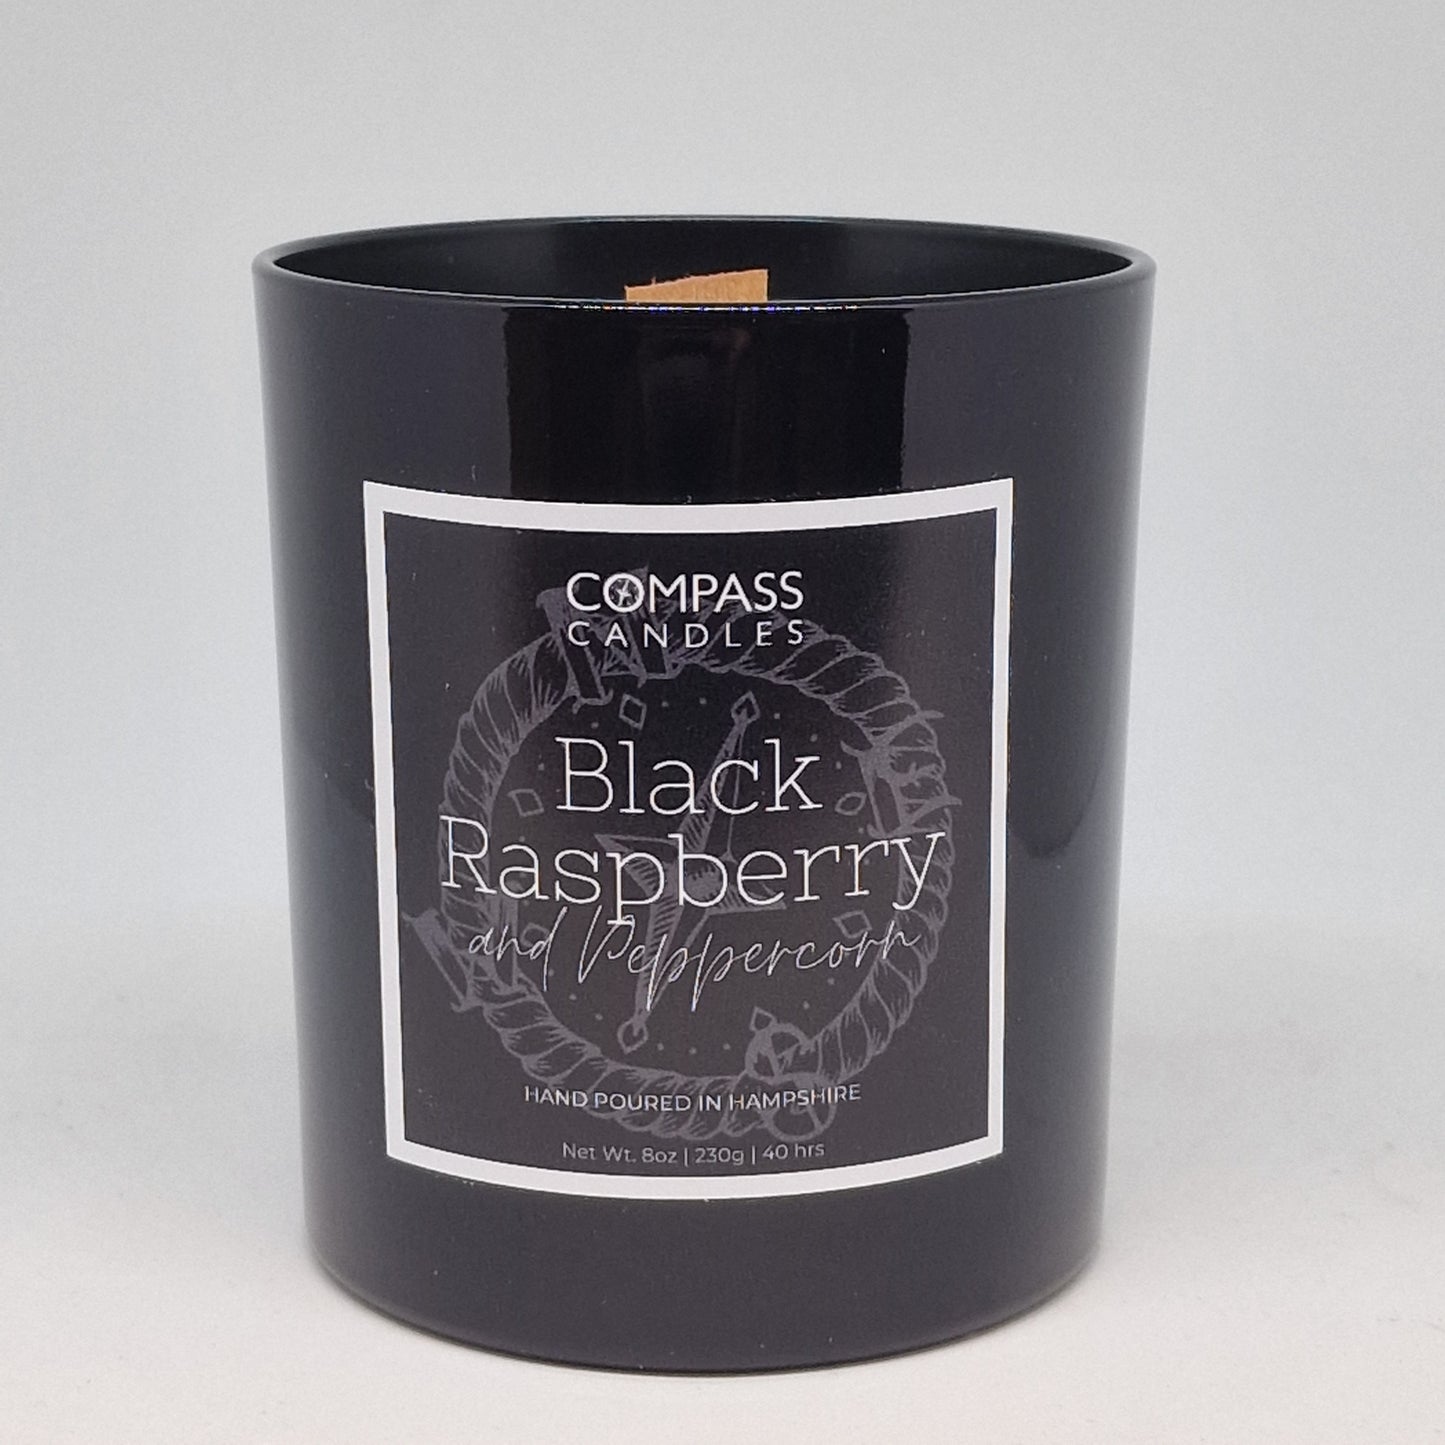 Black Raspberry & Peppercorn Classic Candle